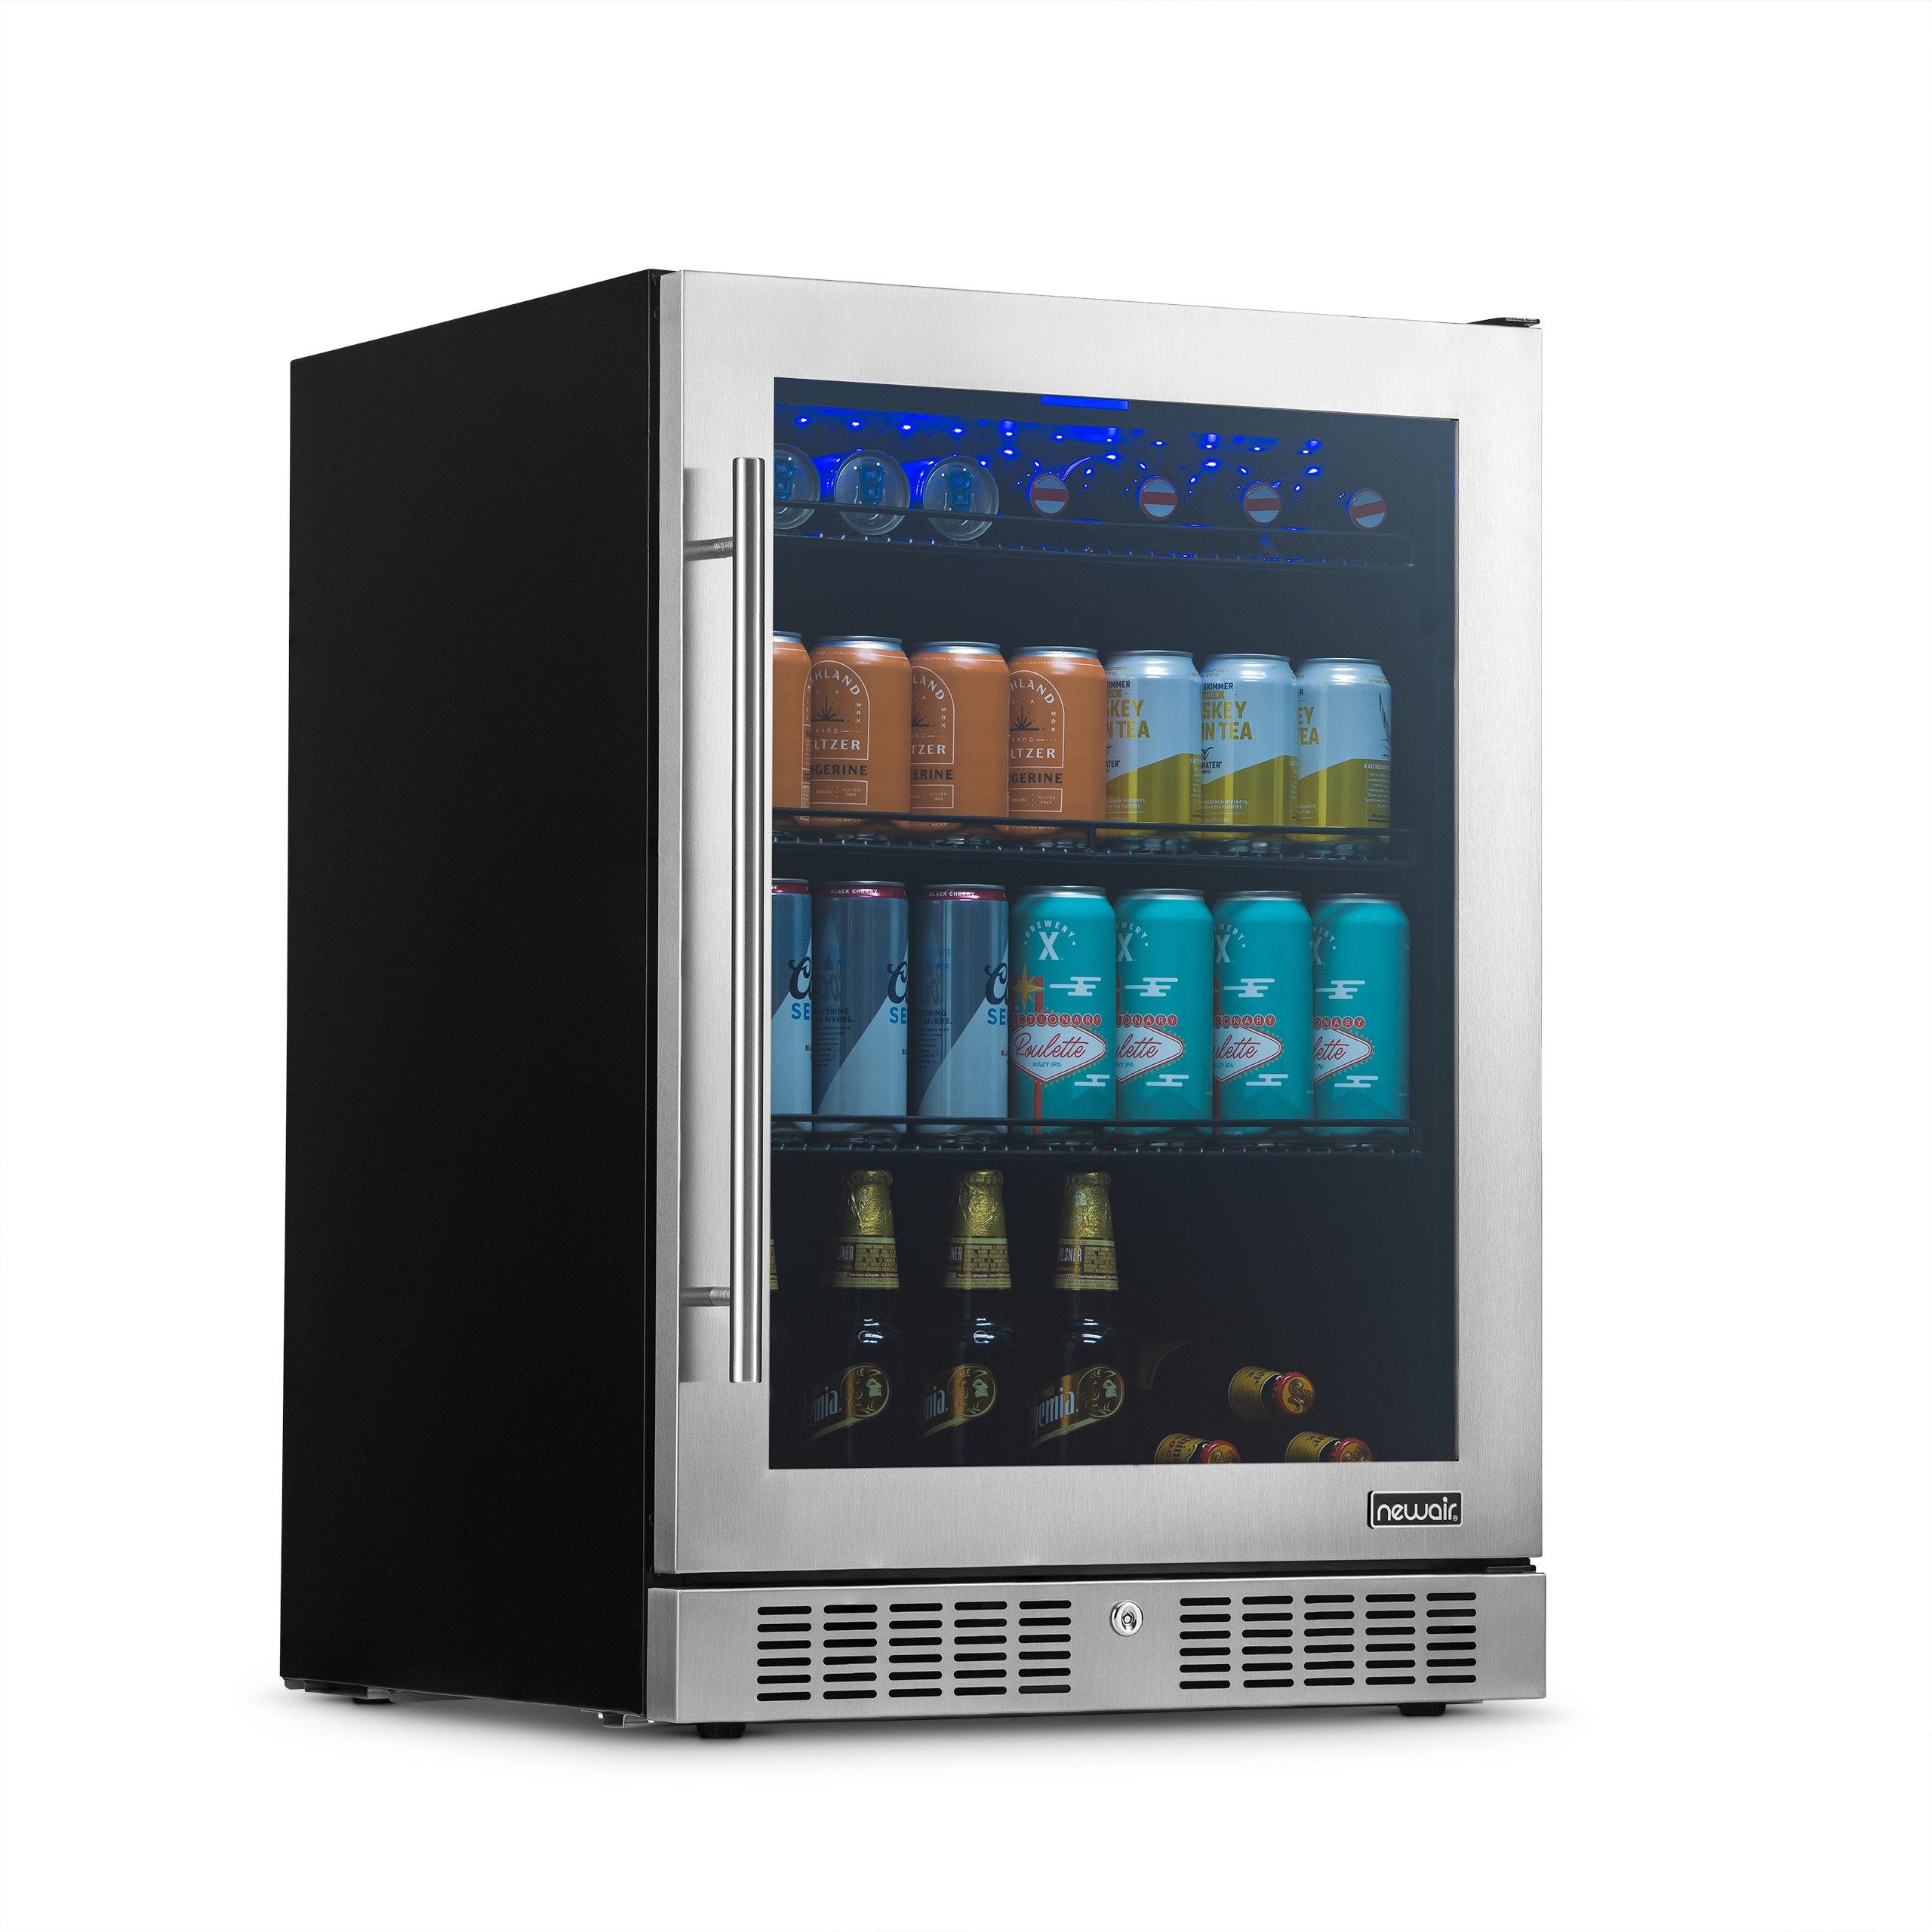 Premium AI Image  Vibrant Red Refrigerator in a Modern Kitchen